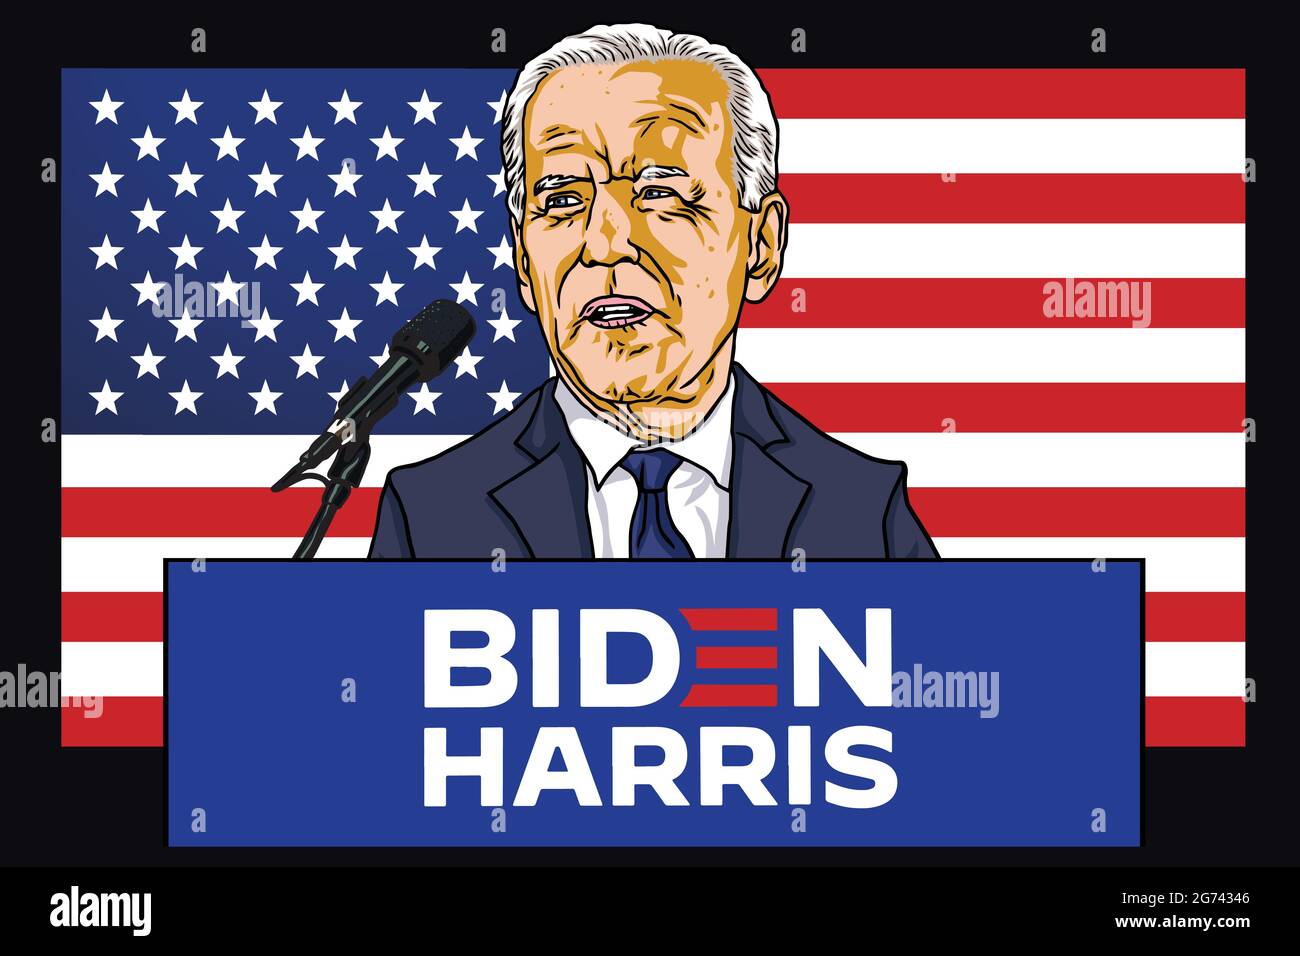 Joe Biden Presidential Election Campaign Speech Cartoon Caricature Vector Illustration with American Flag Background. Washington, 3 November 2020 Stock Vector